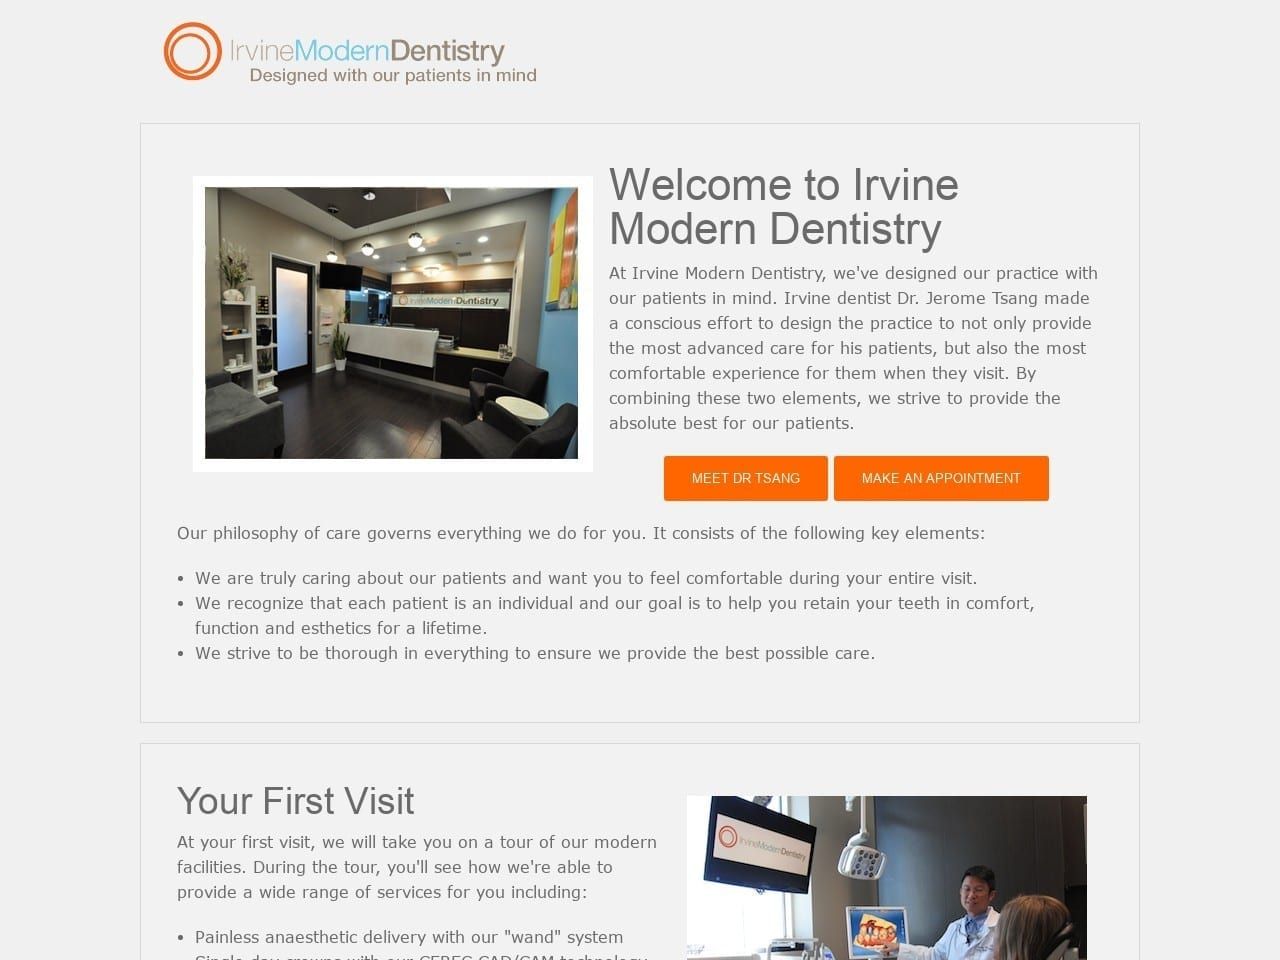 Irvine Modern Dentistry Website Screenshot from irvinemoderndentistry.com